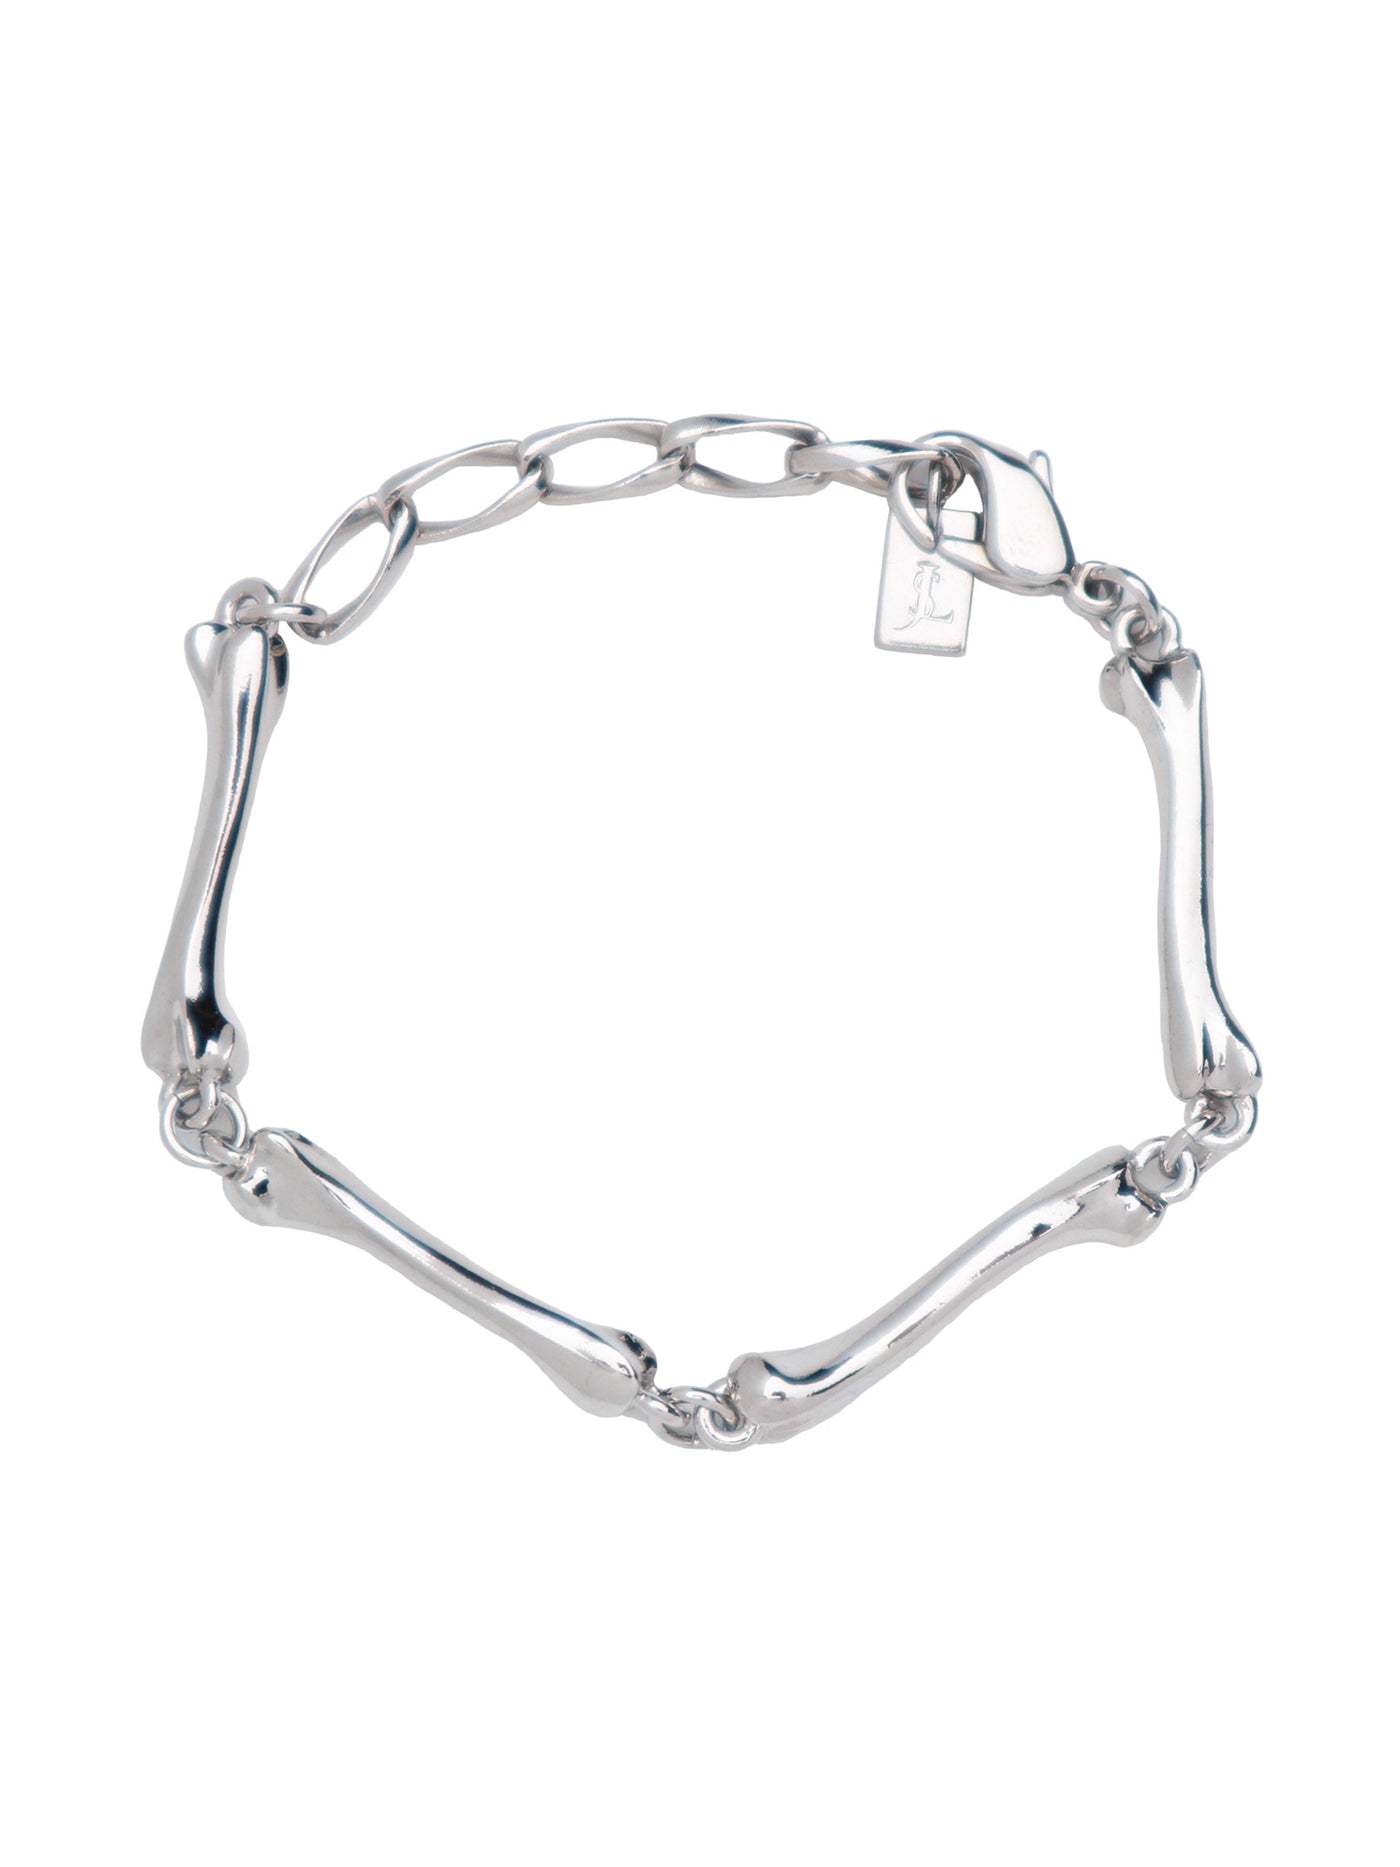 Bone connected short bracelet silver925